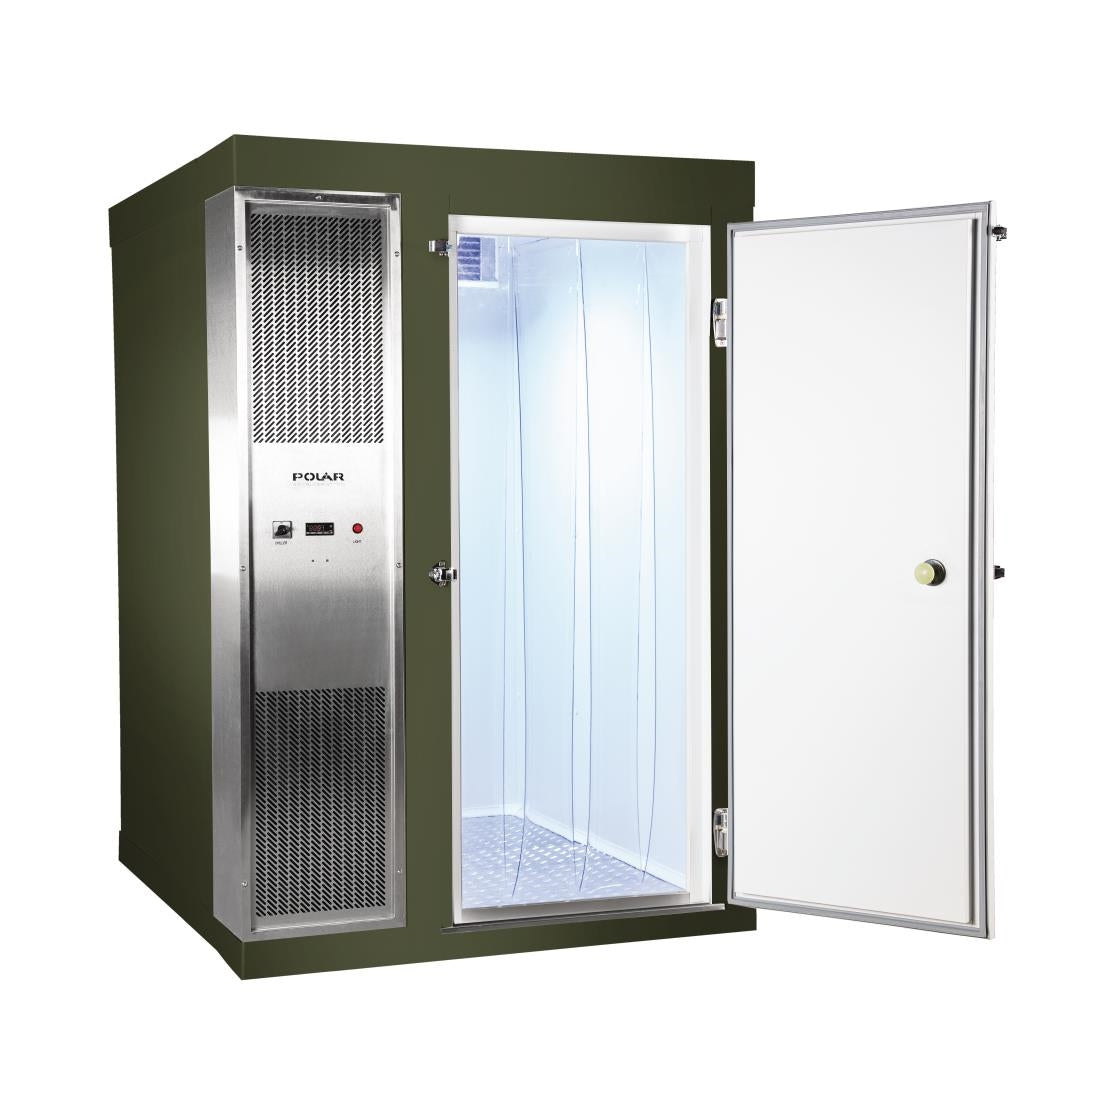 DS480-CGN Polar U-Series 1.2 x 1.5m Integral Walk In Cold Room Green JD Catering Equipment Solutions Ltd